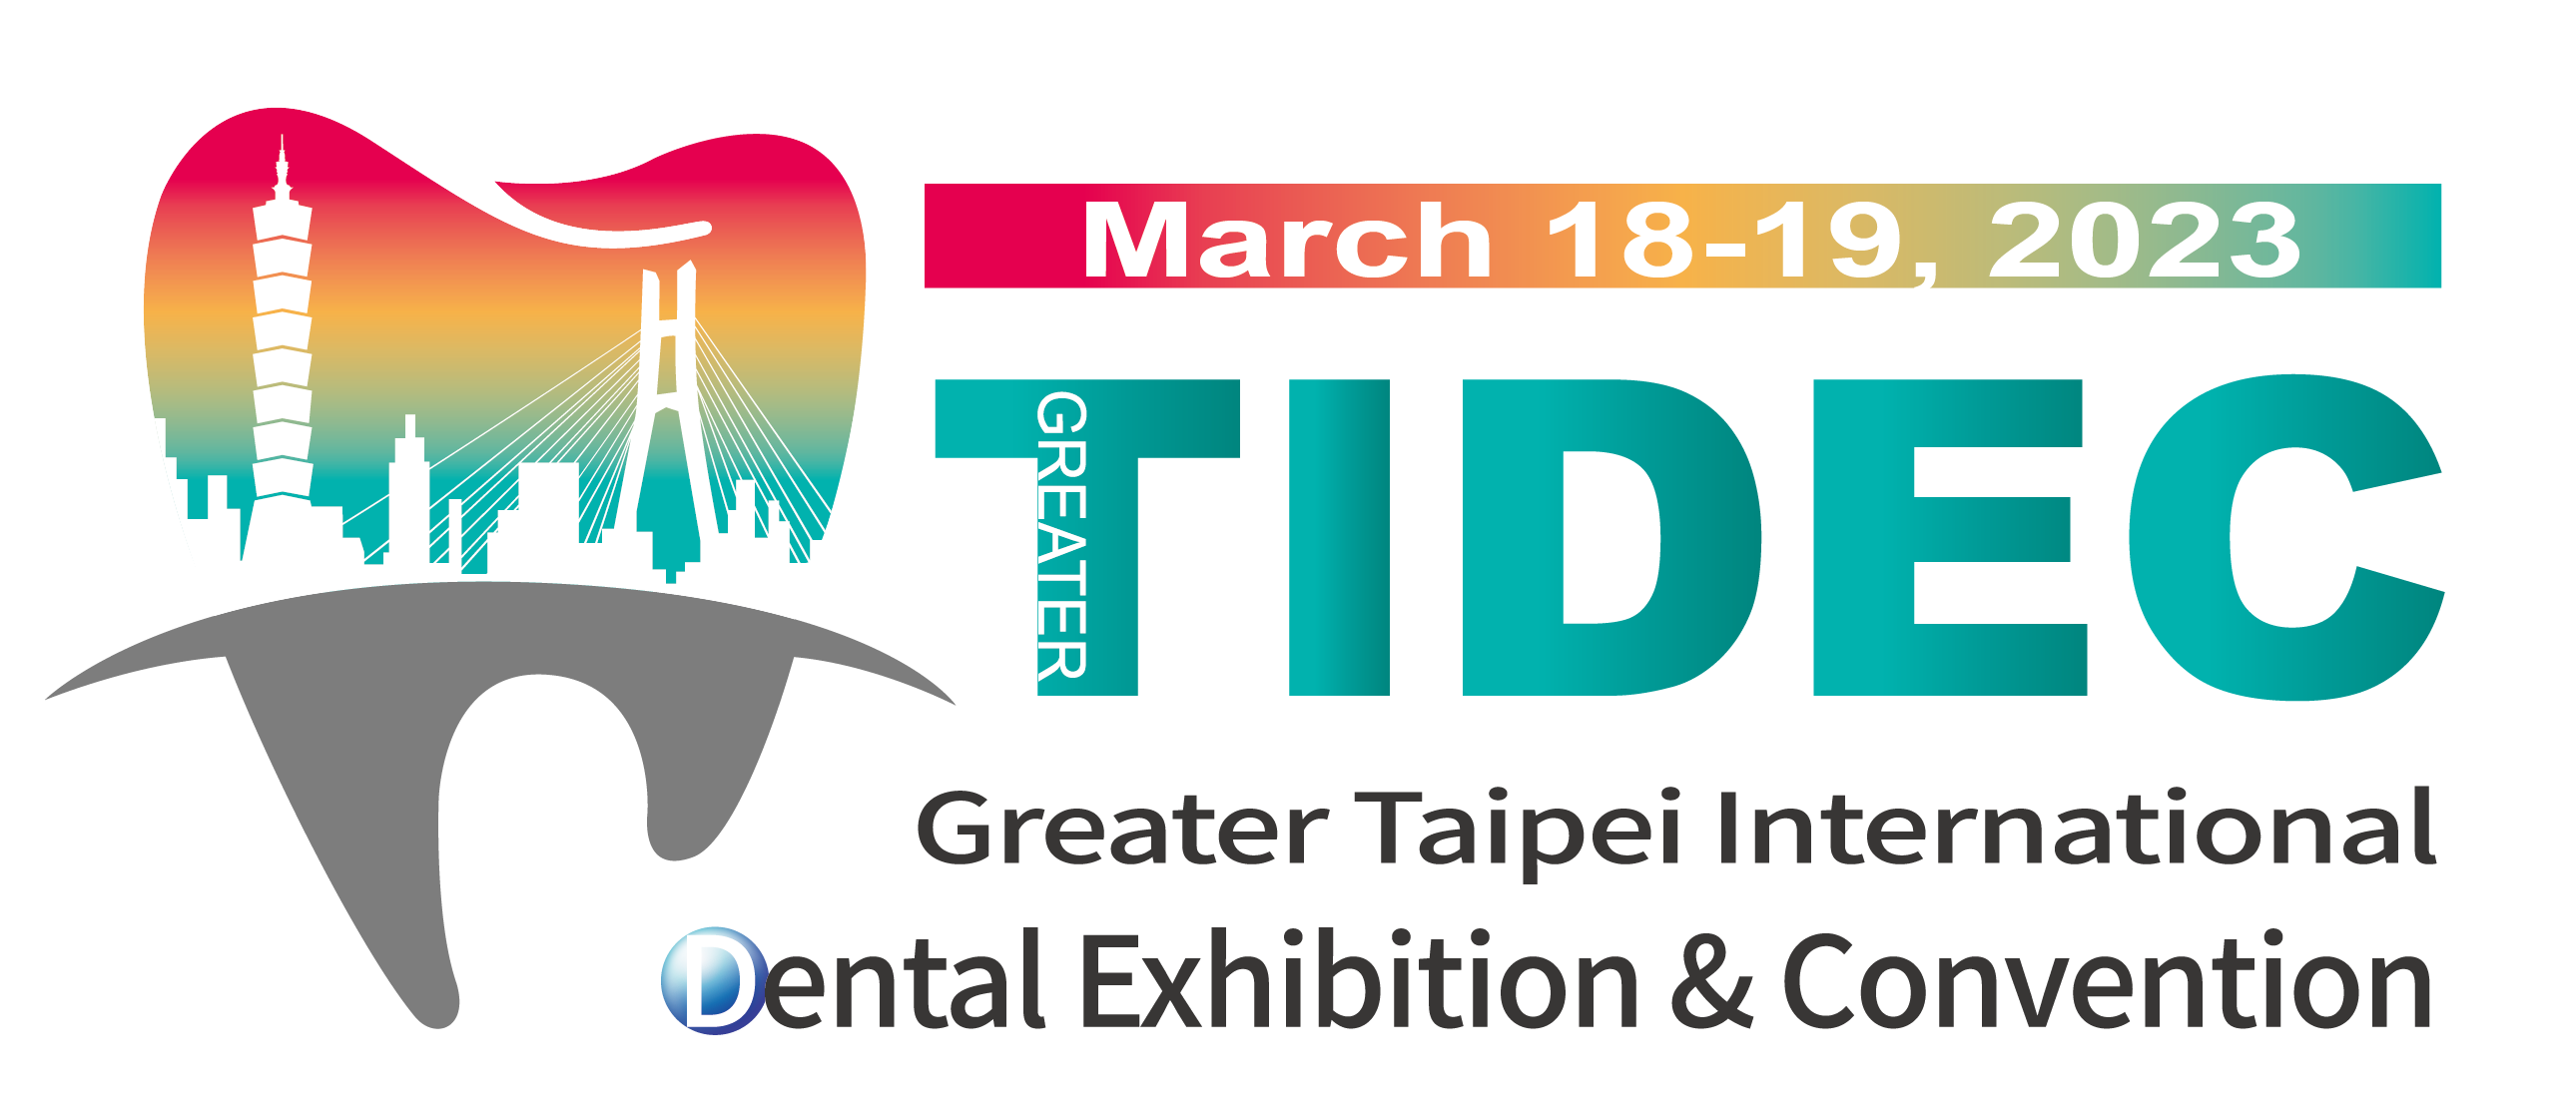 Greater Taipei International Dental Exhibition & Convention